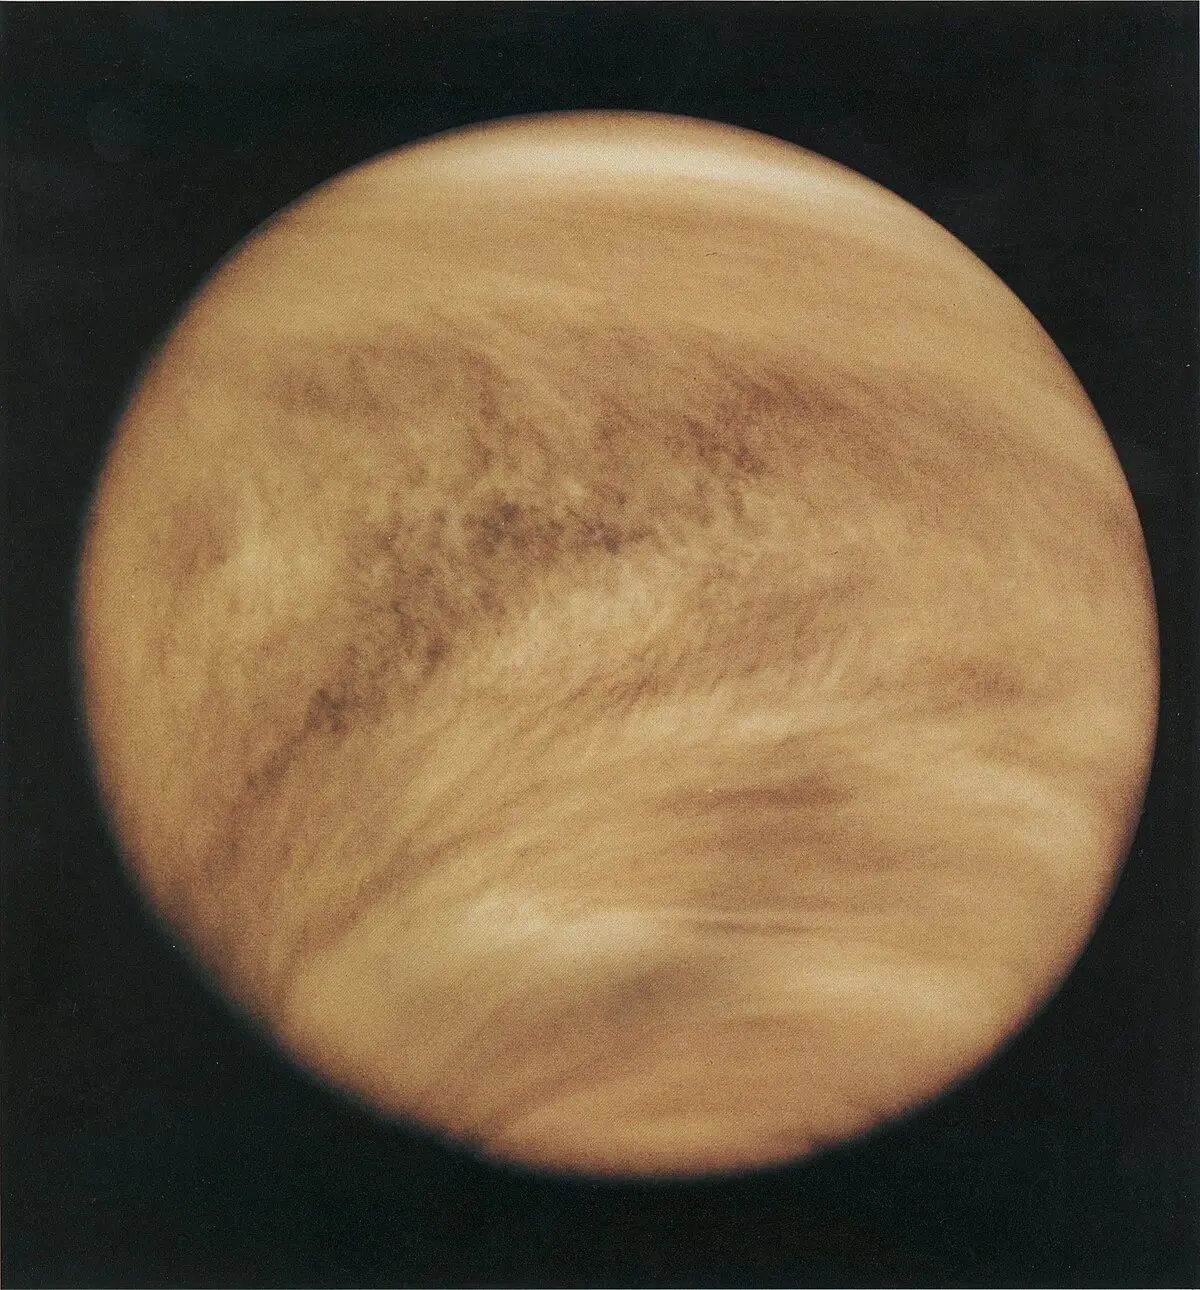 resumen de venus - Cómo se le dice al planeta Venus